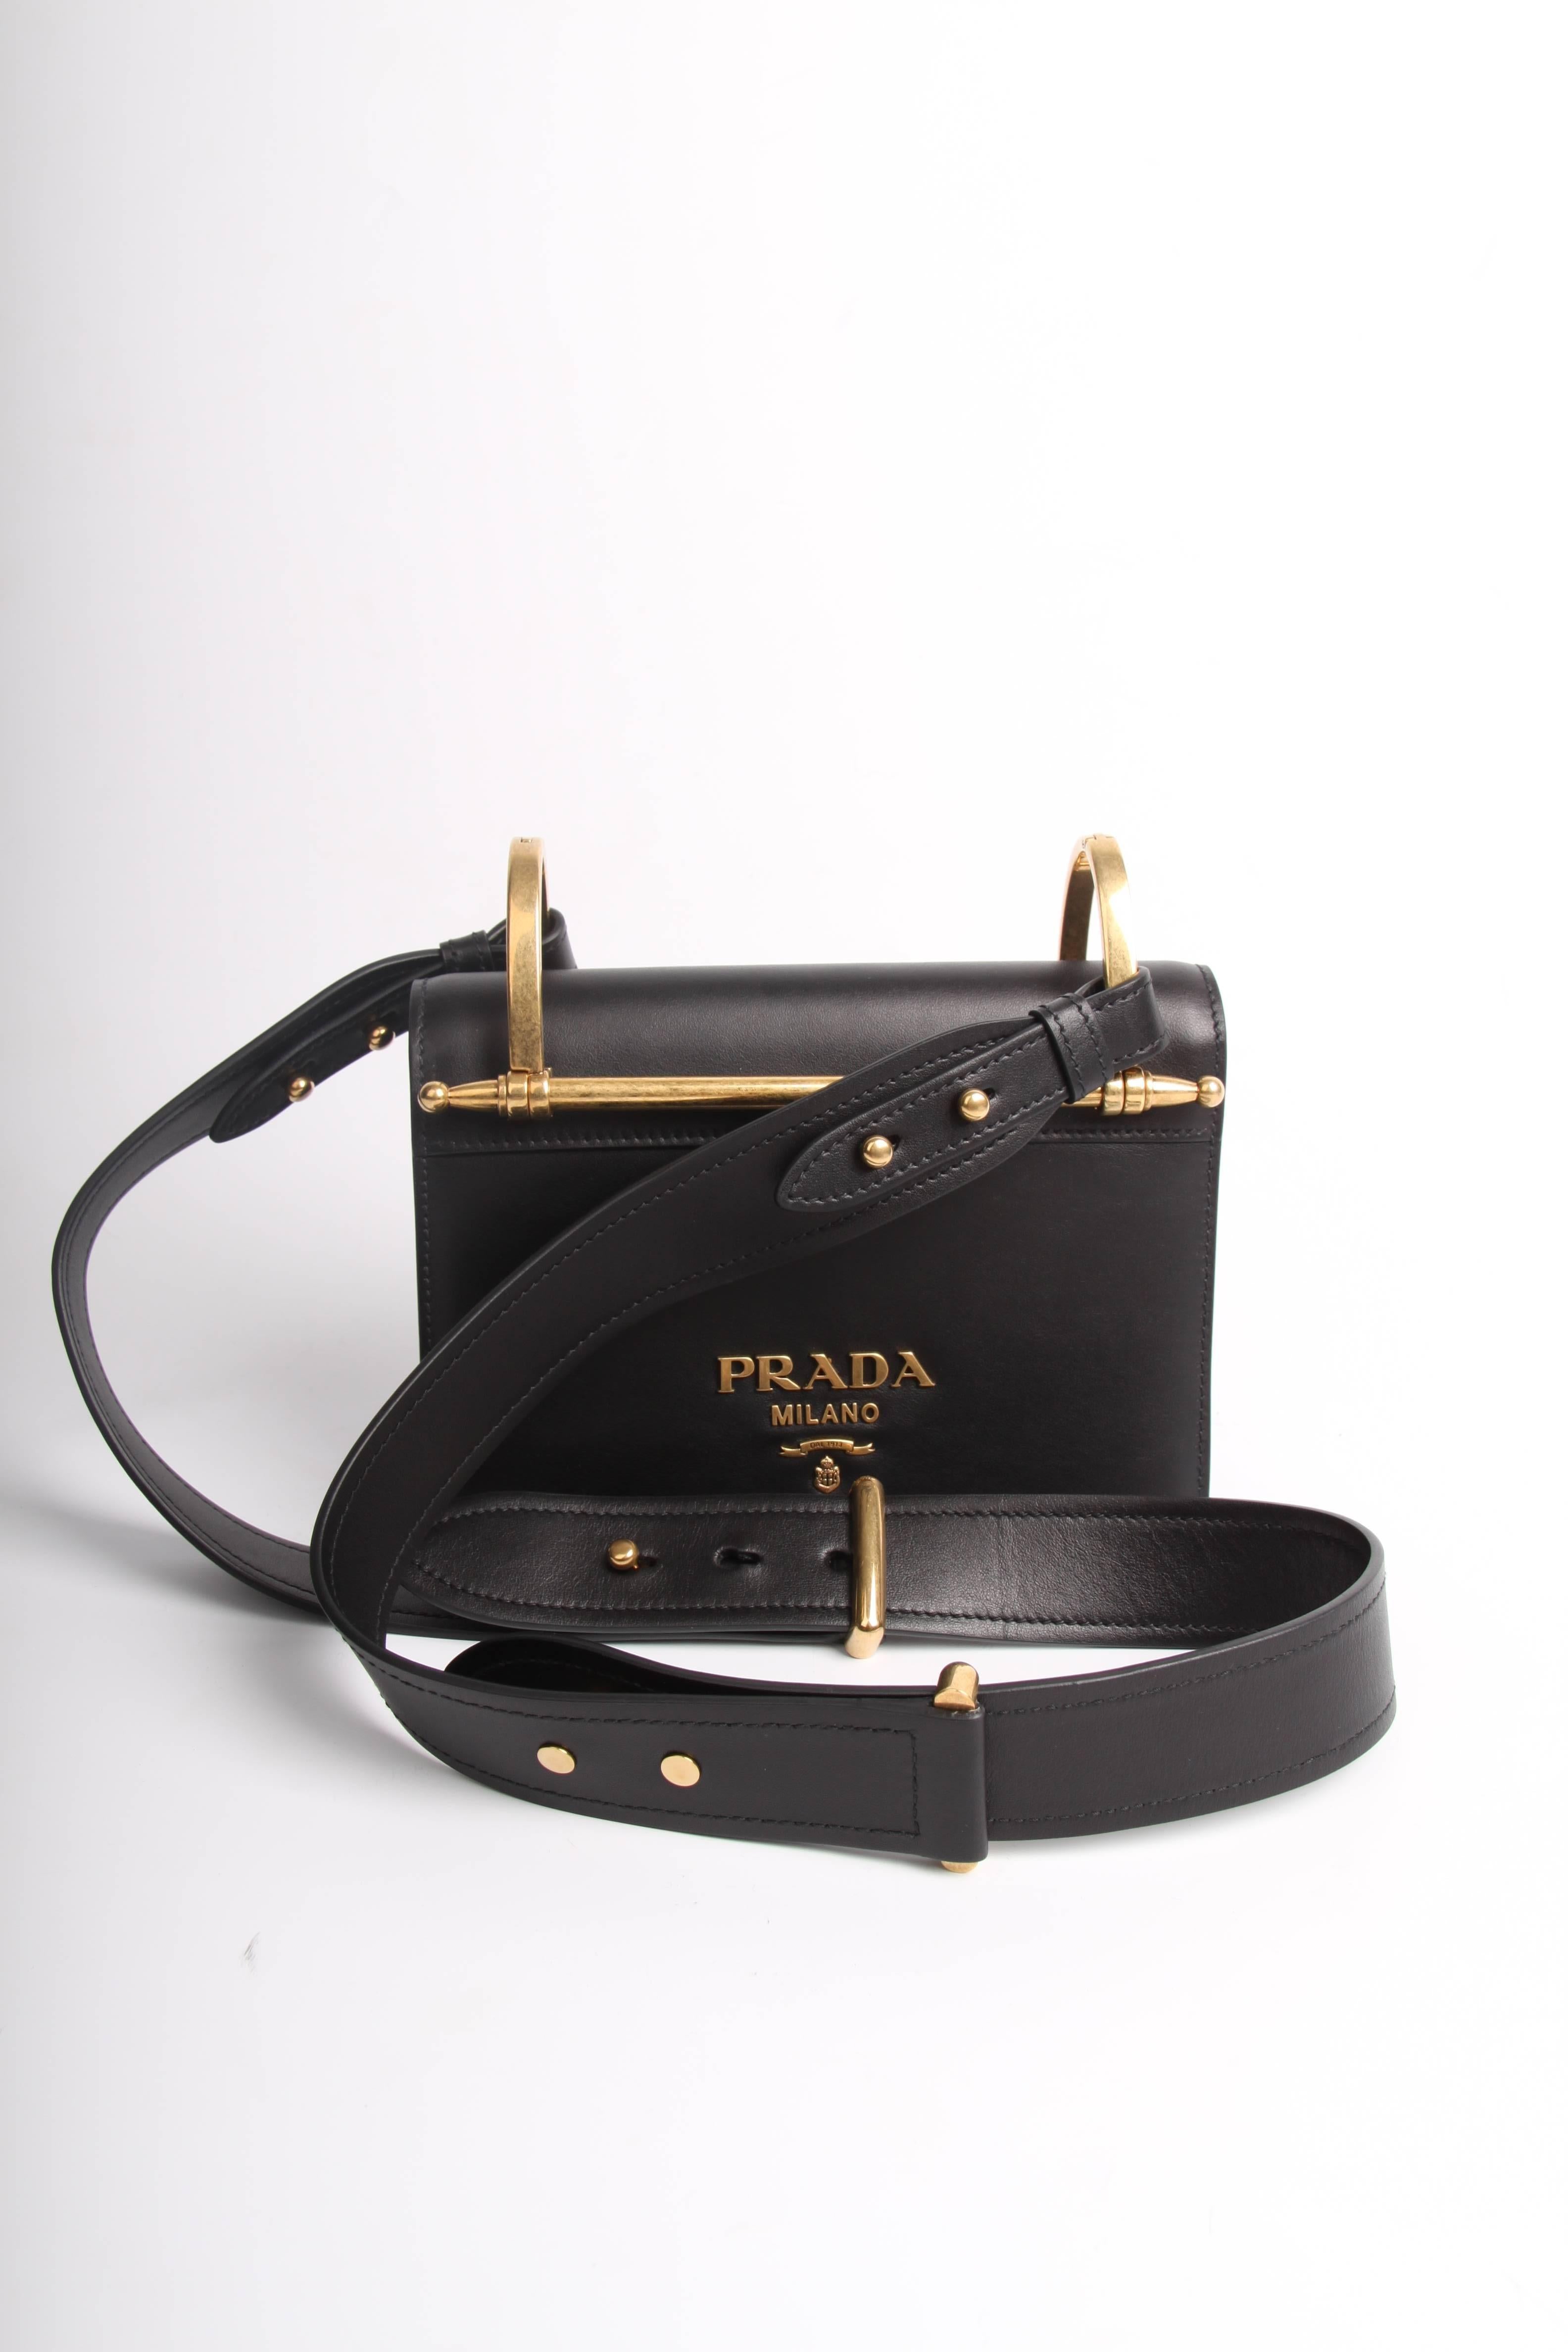 Prada Antic Soft Shoulder Bag - black 2018 3